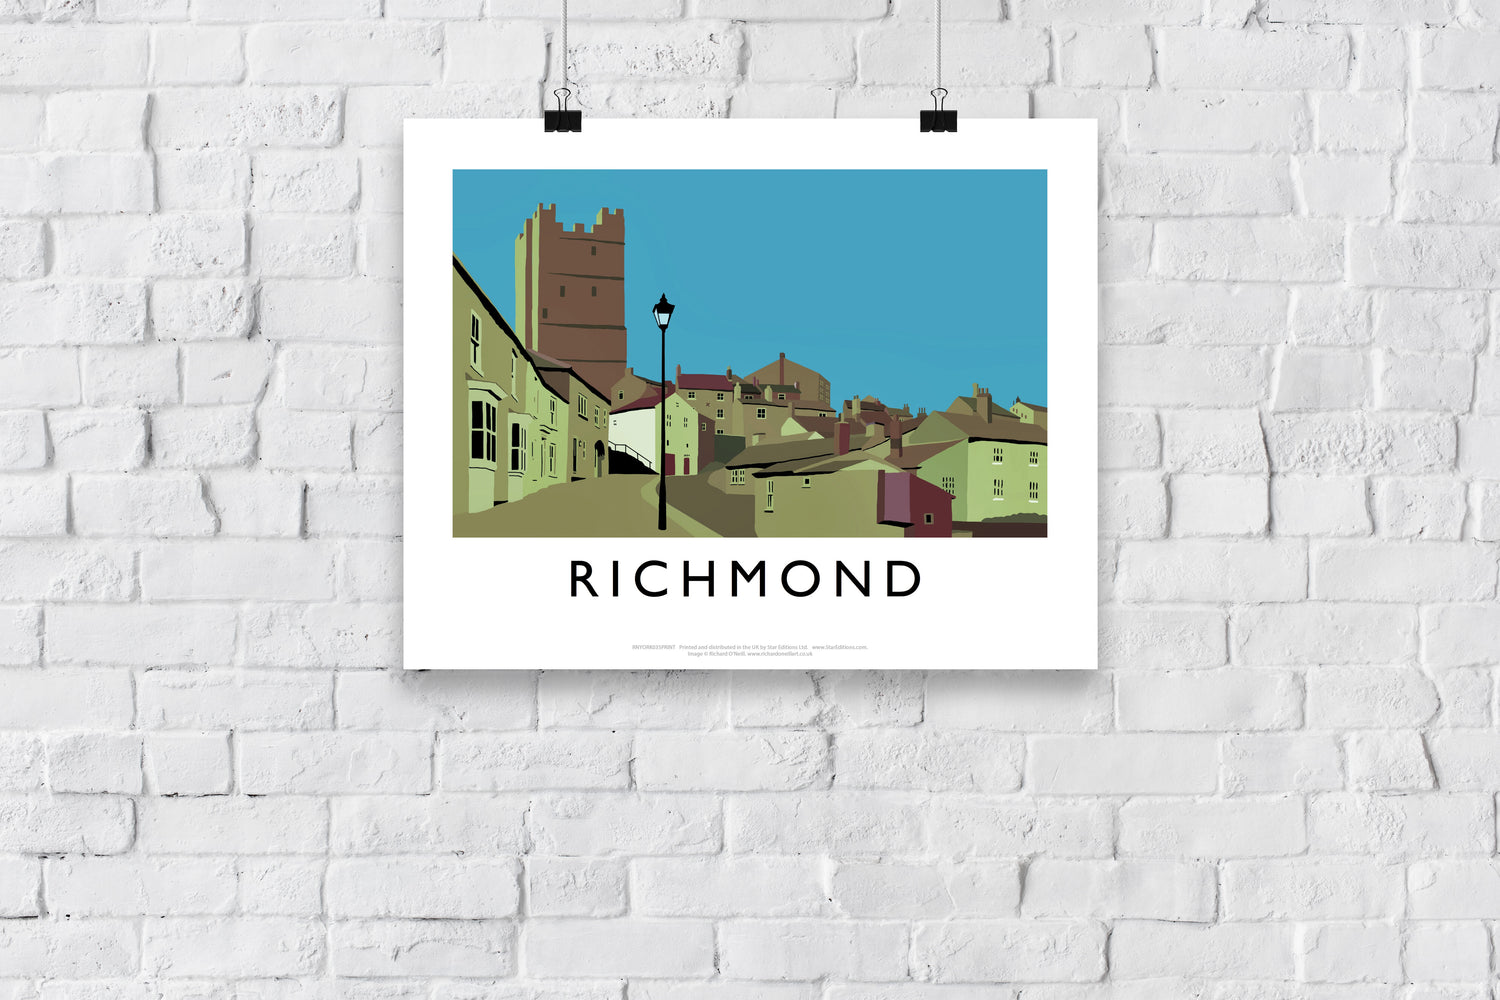 Richmond, Yorkshire - Art Print